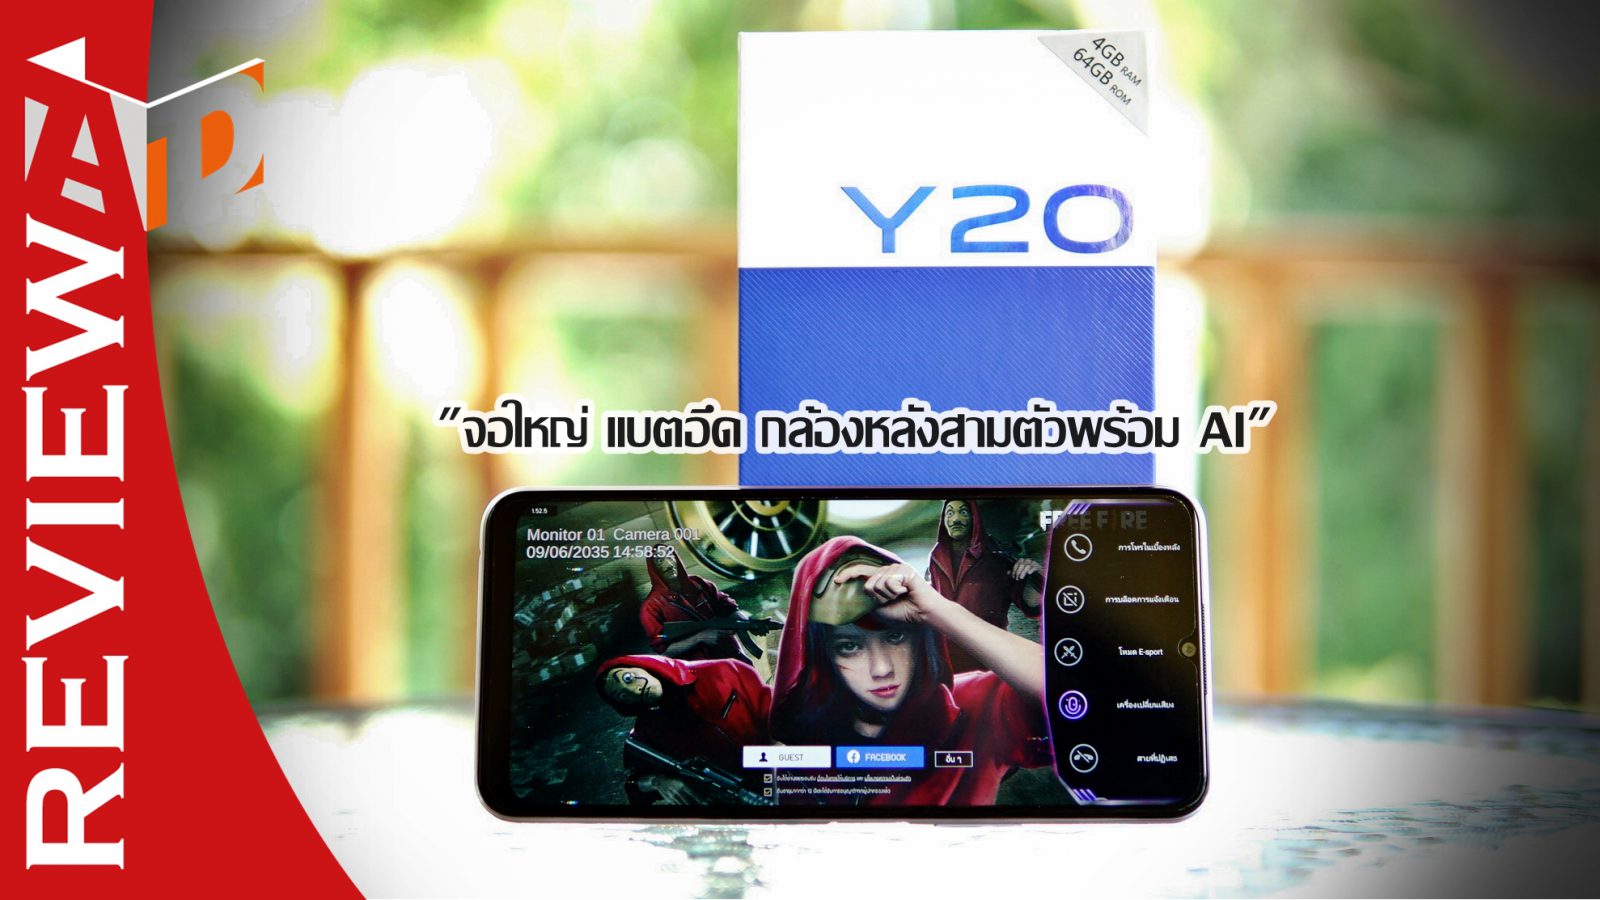 Review Vivo Y20 | Review | รีวิว Vivo Y20 ราคาเล็กสเปคดี จอใหญ่แบตอึด 5,000 mAh กล้องหลังสามตัวพร้อม AI ฟังก์ชั่นเพียบ!